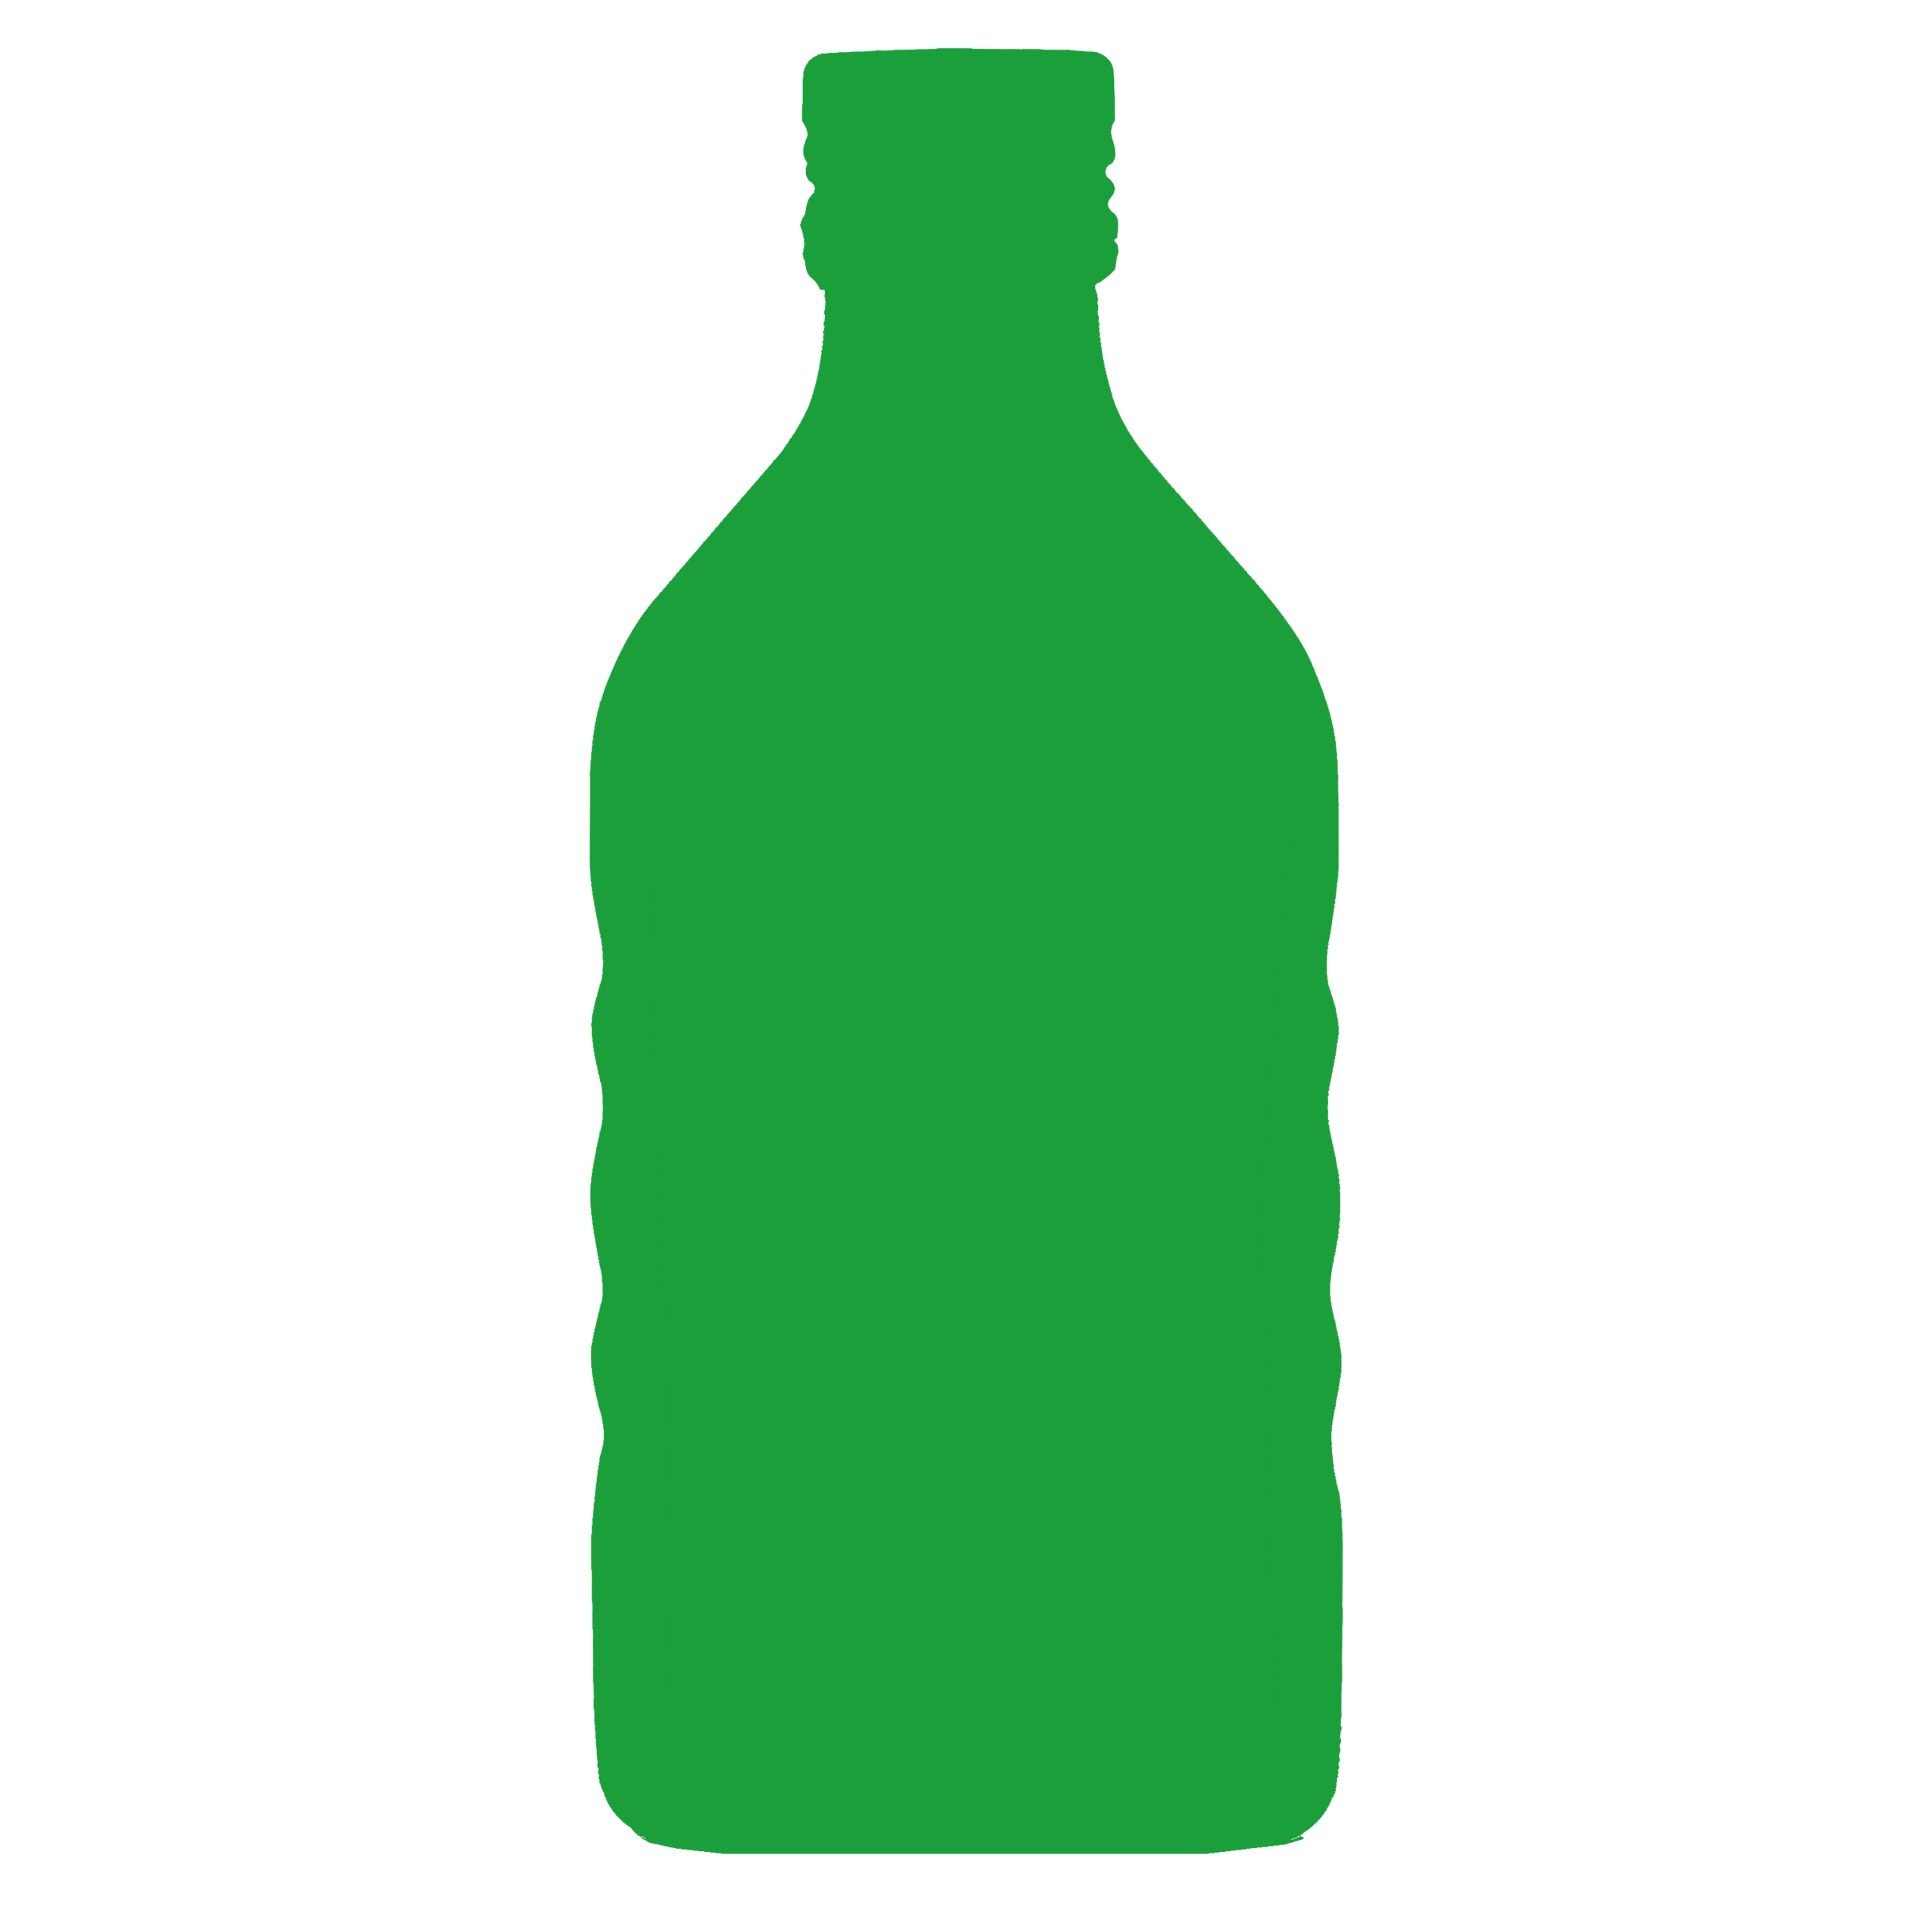 Groene fles klantenservice